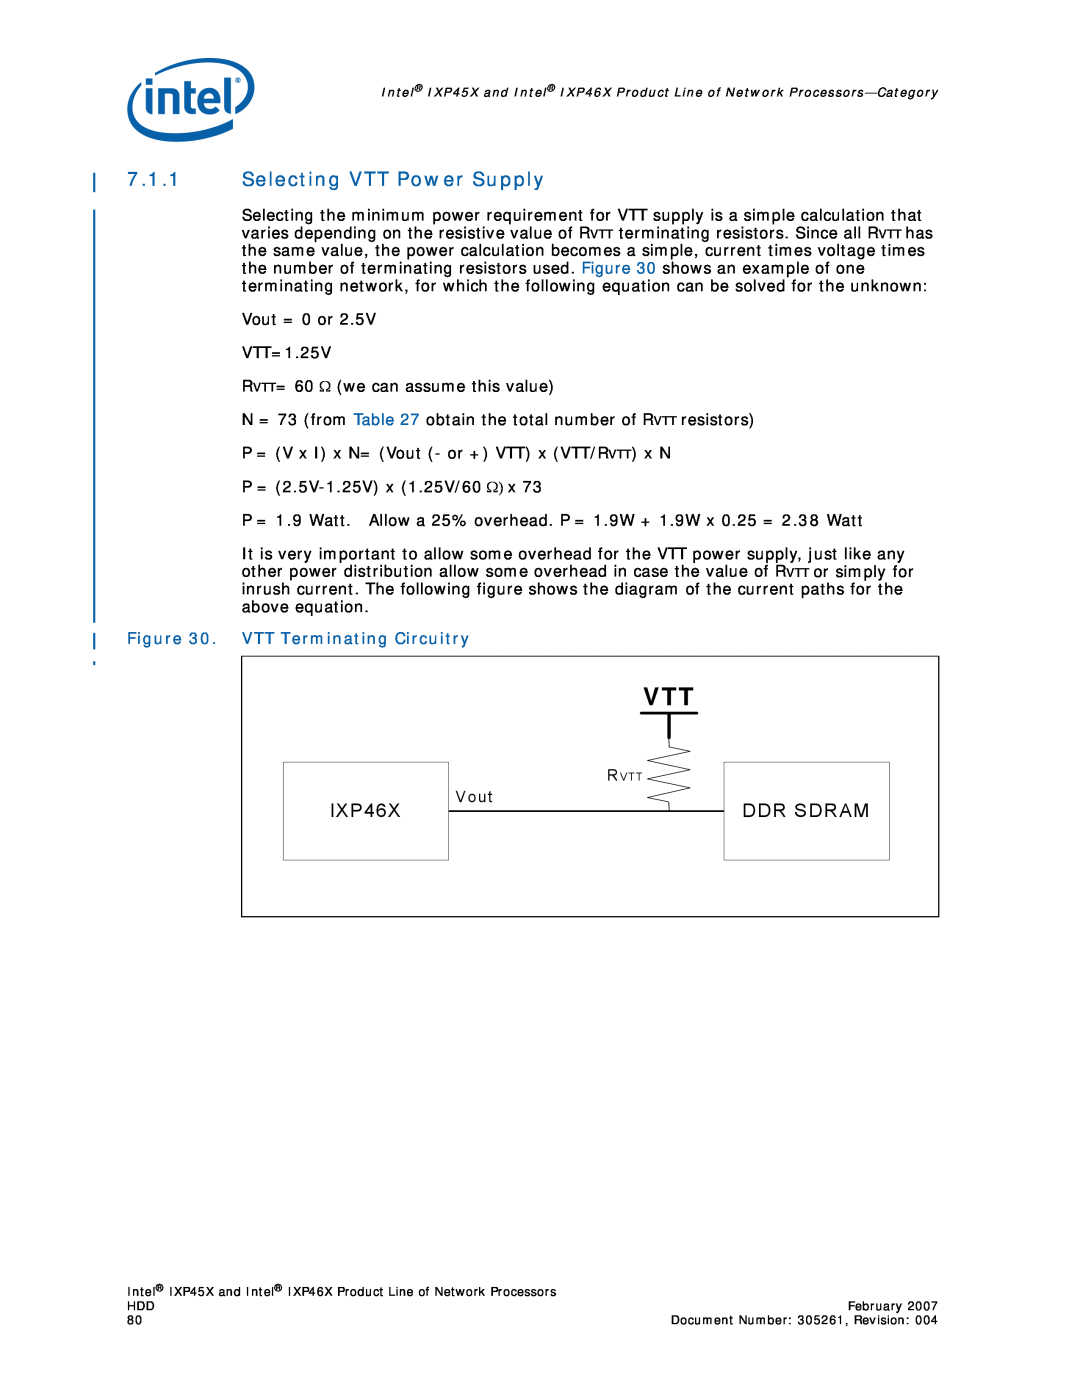 Intel IXP46X, IXP45X manual 7.1.1Selecting VTT Power Supply, VTT Terminating Circuitry, Ddr Sdram 